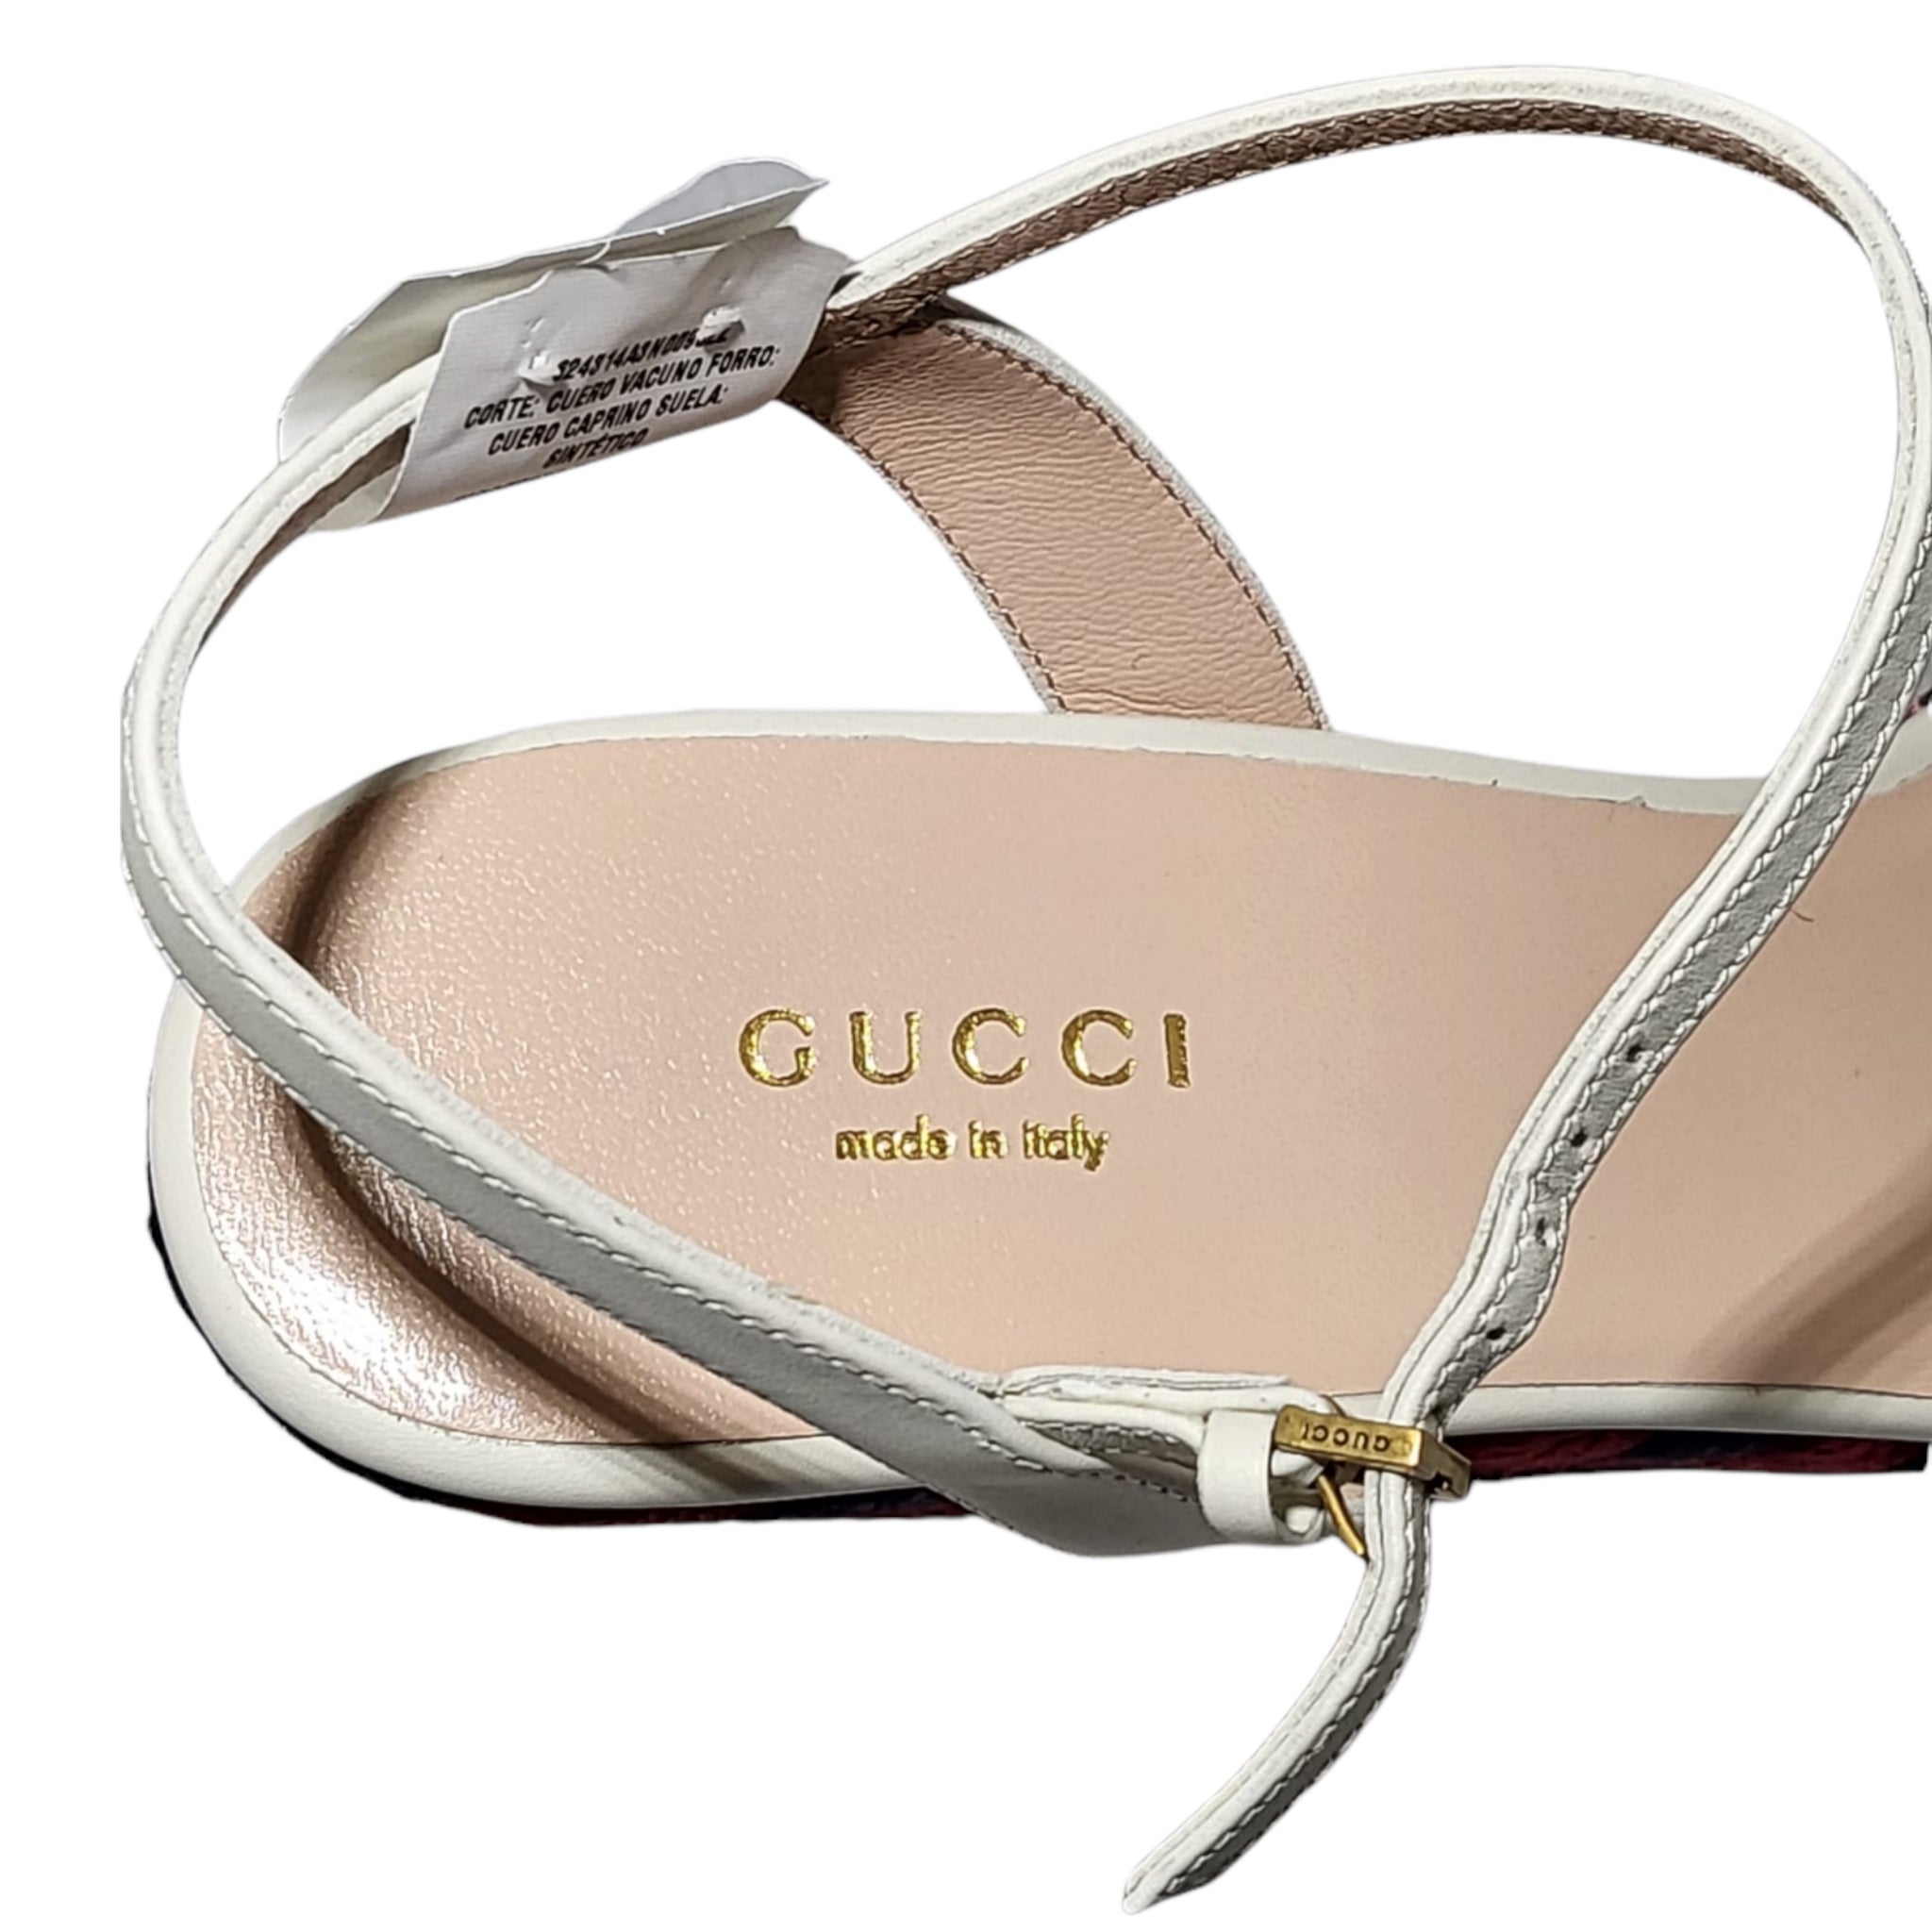 Authentic Gucci GG Marmont Leather Platform Wedge Sandals Size EU 40/8.5-9  US